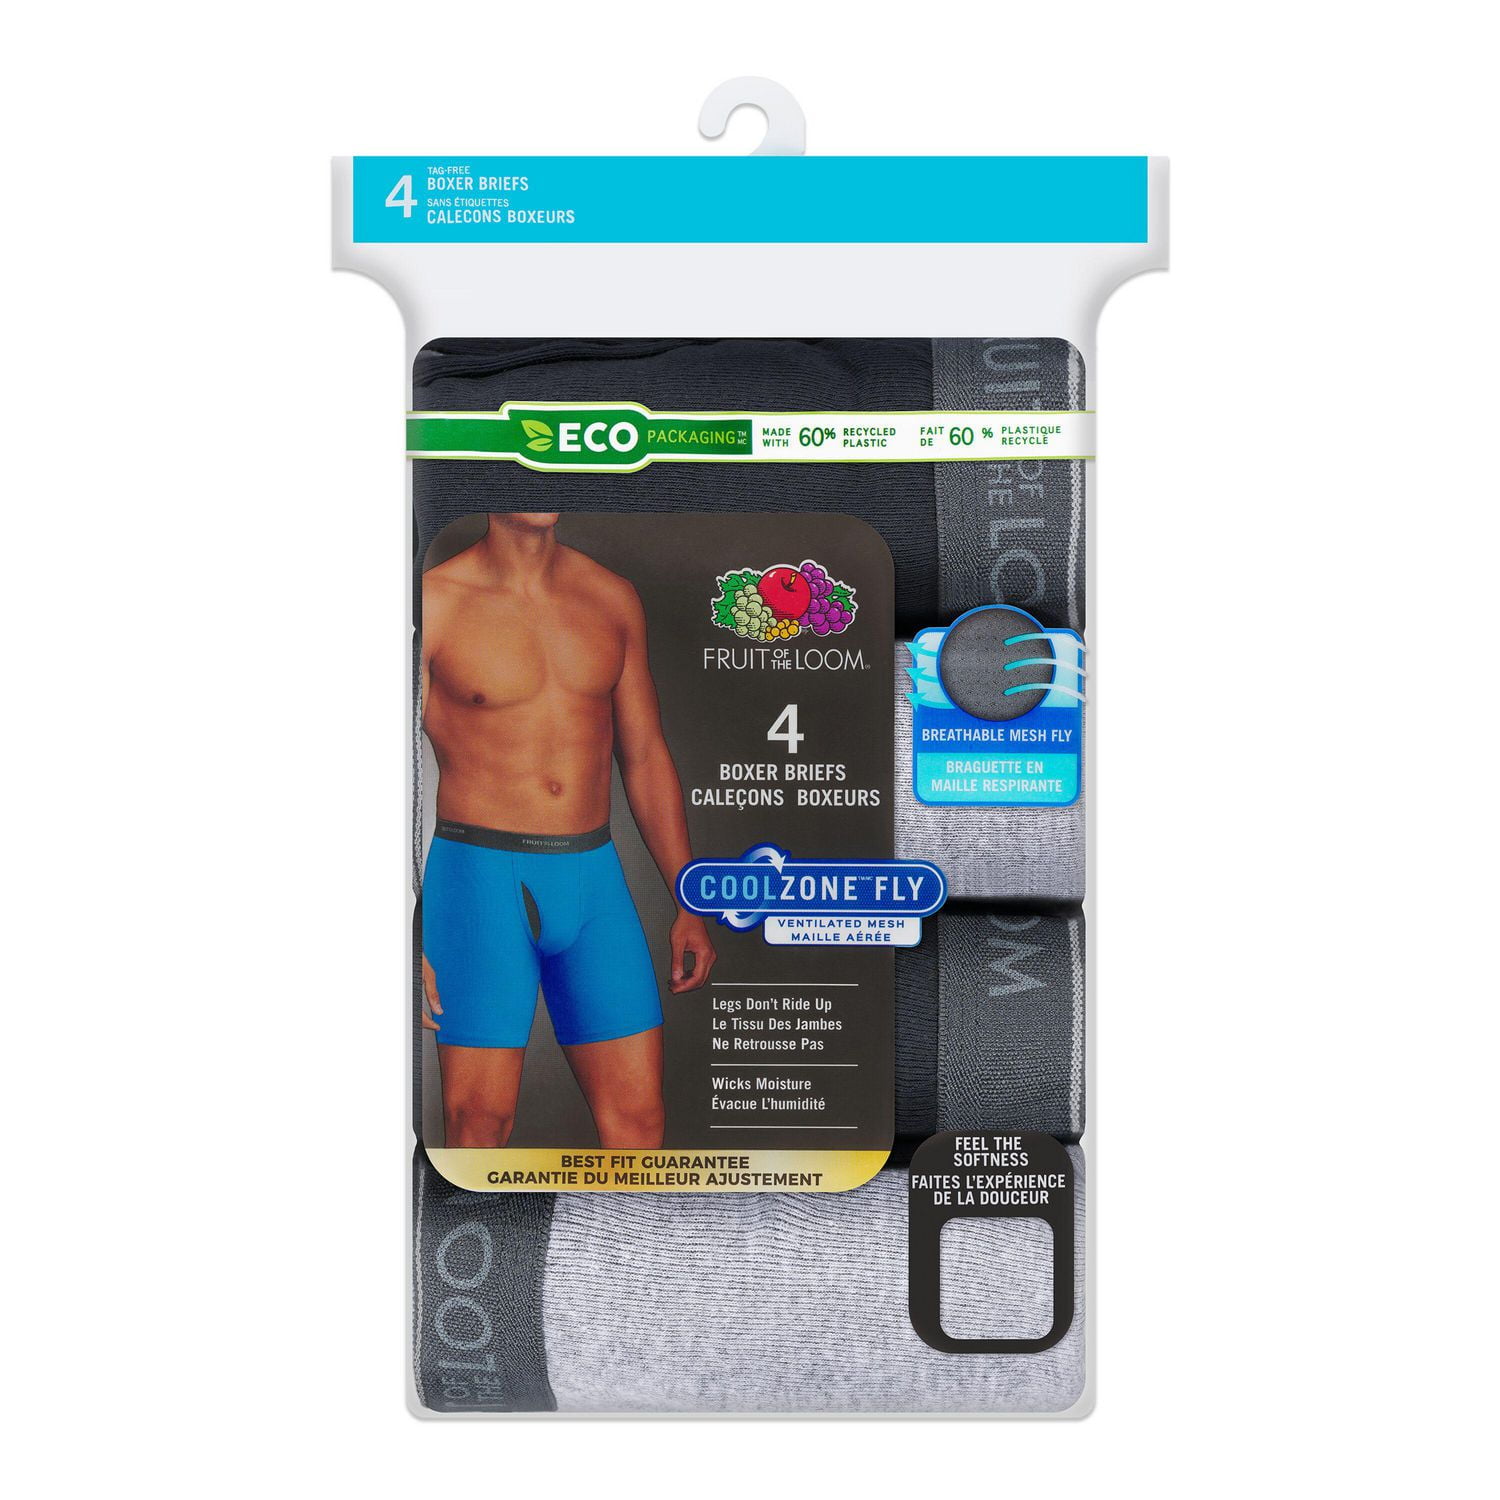 Shop HELLO™ Fun - Men's Boxers Underwear (Pack of 4)